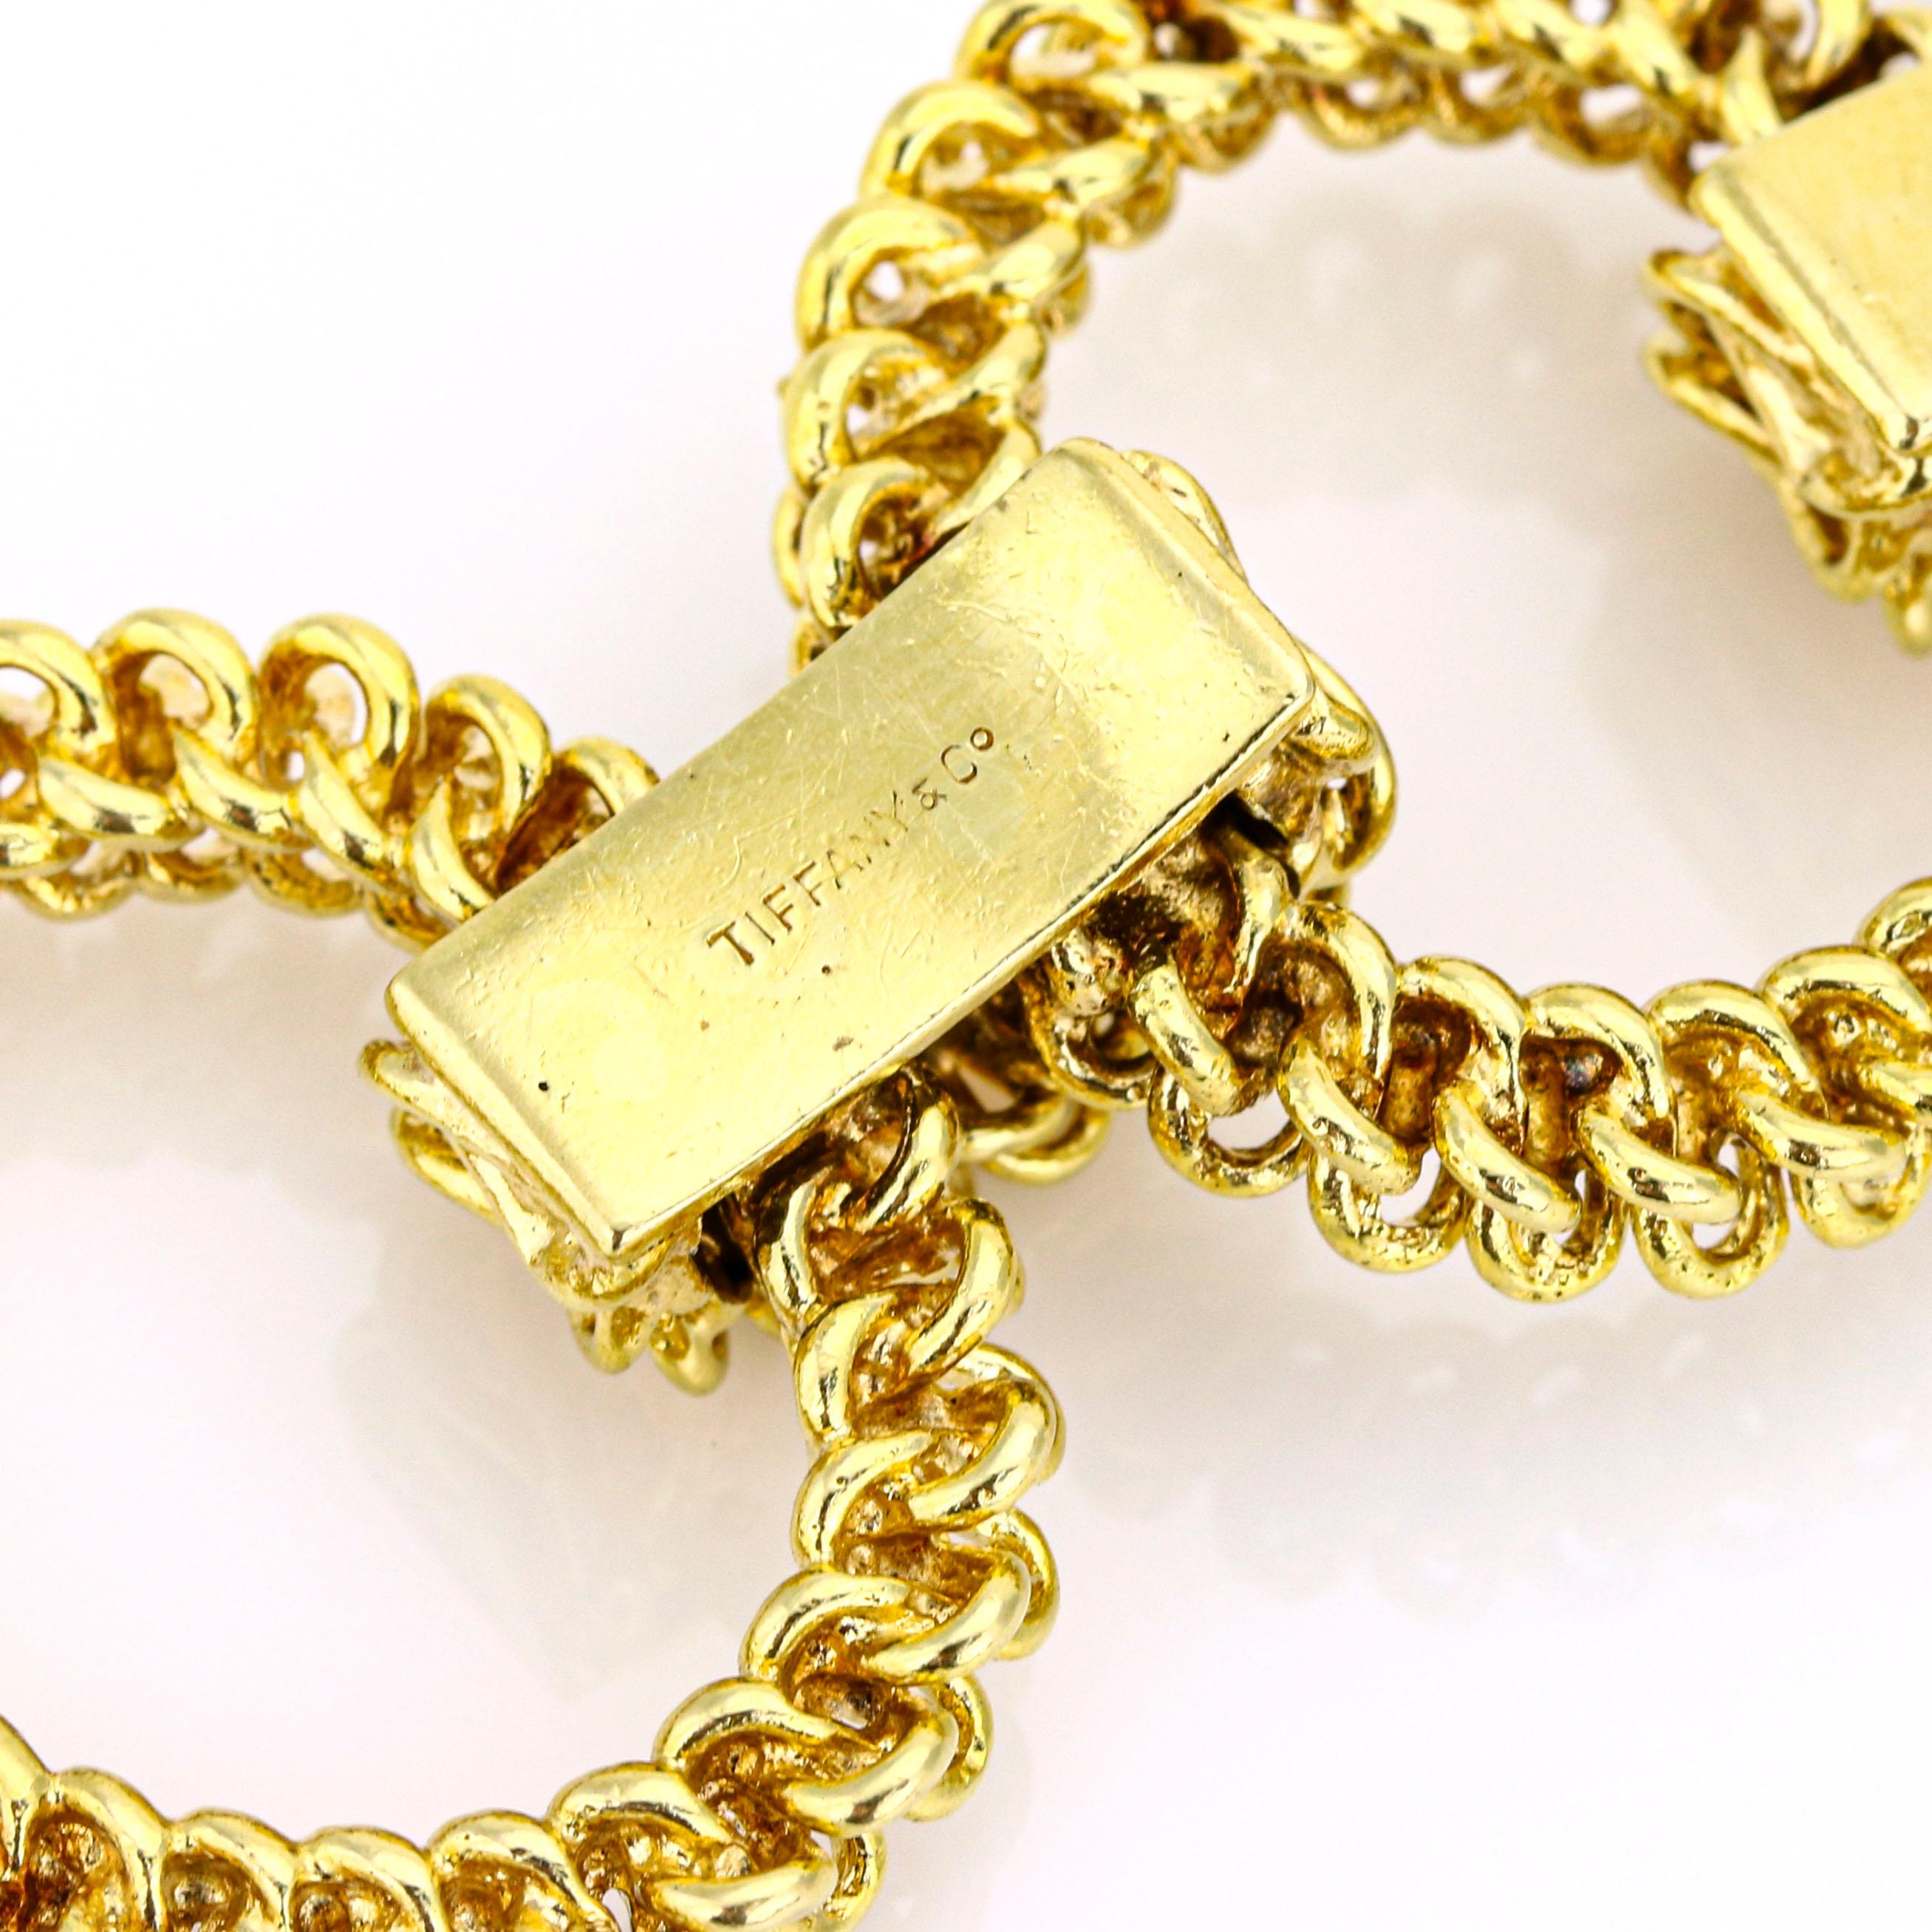 Tiffany & Co. France 18 Karat Yellow Gold Textured Open Link Bracelet For Sale 2